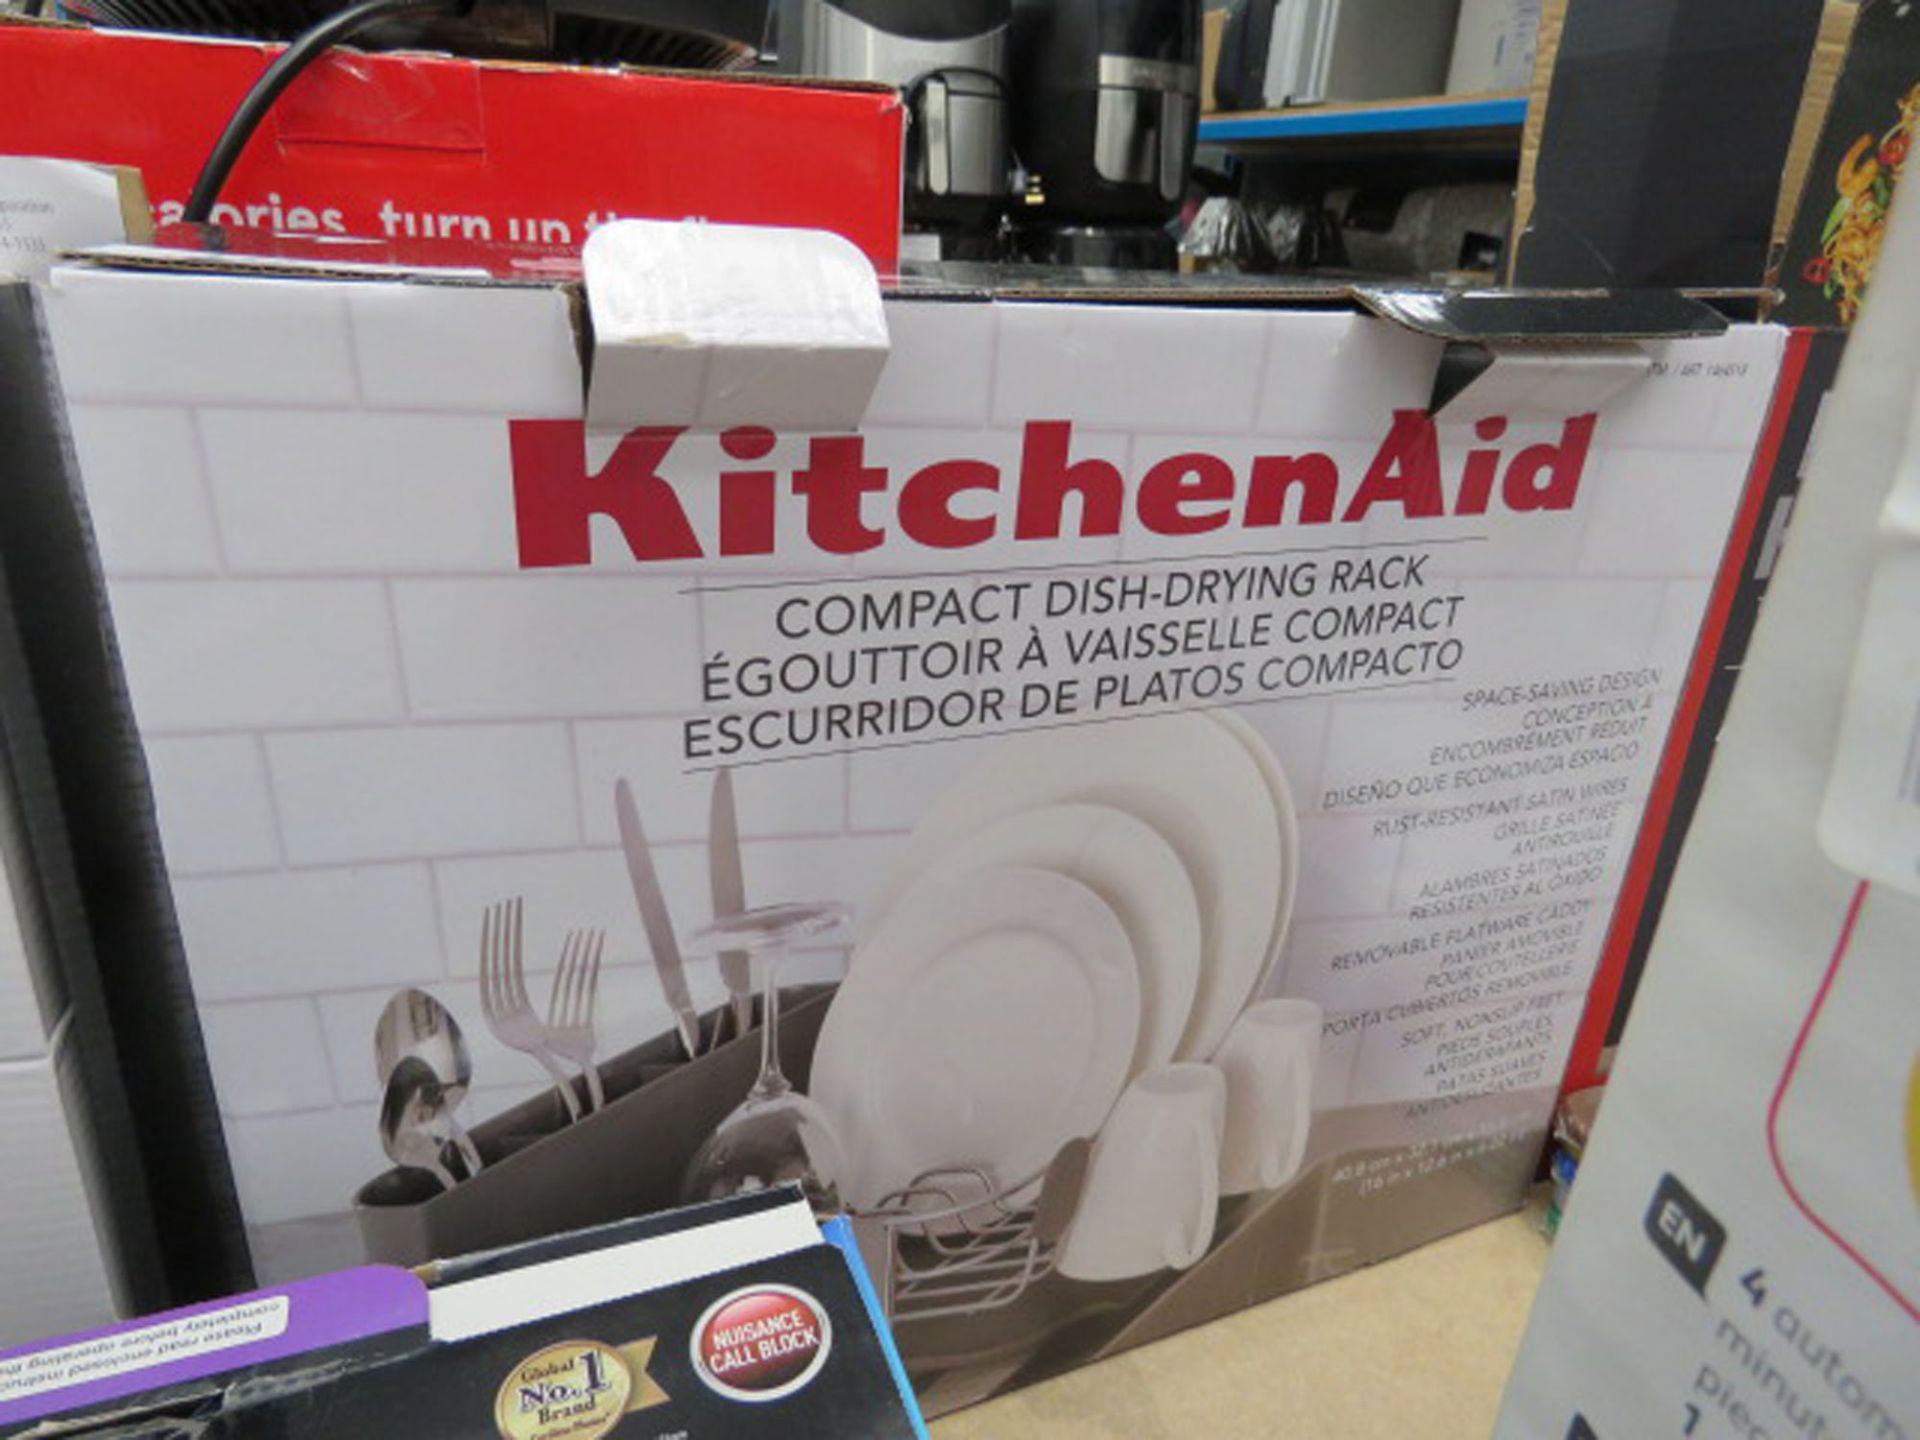 Kitchenaid Compact dish drying rack with box